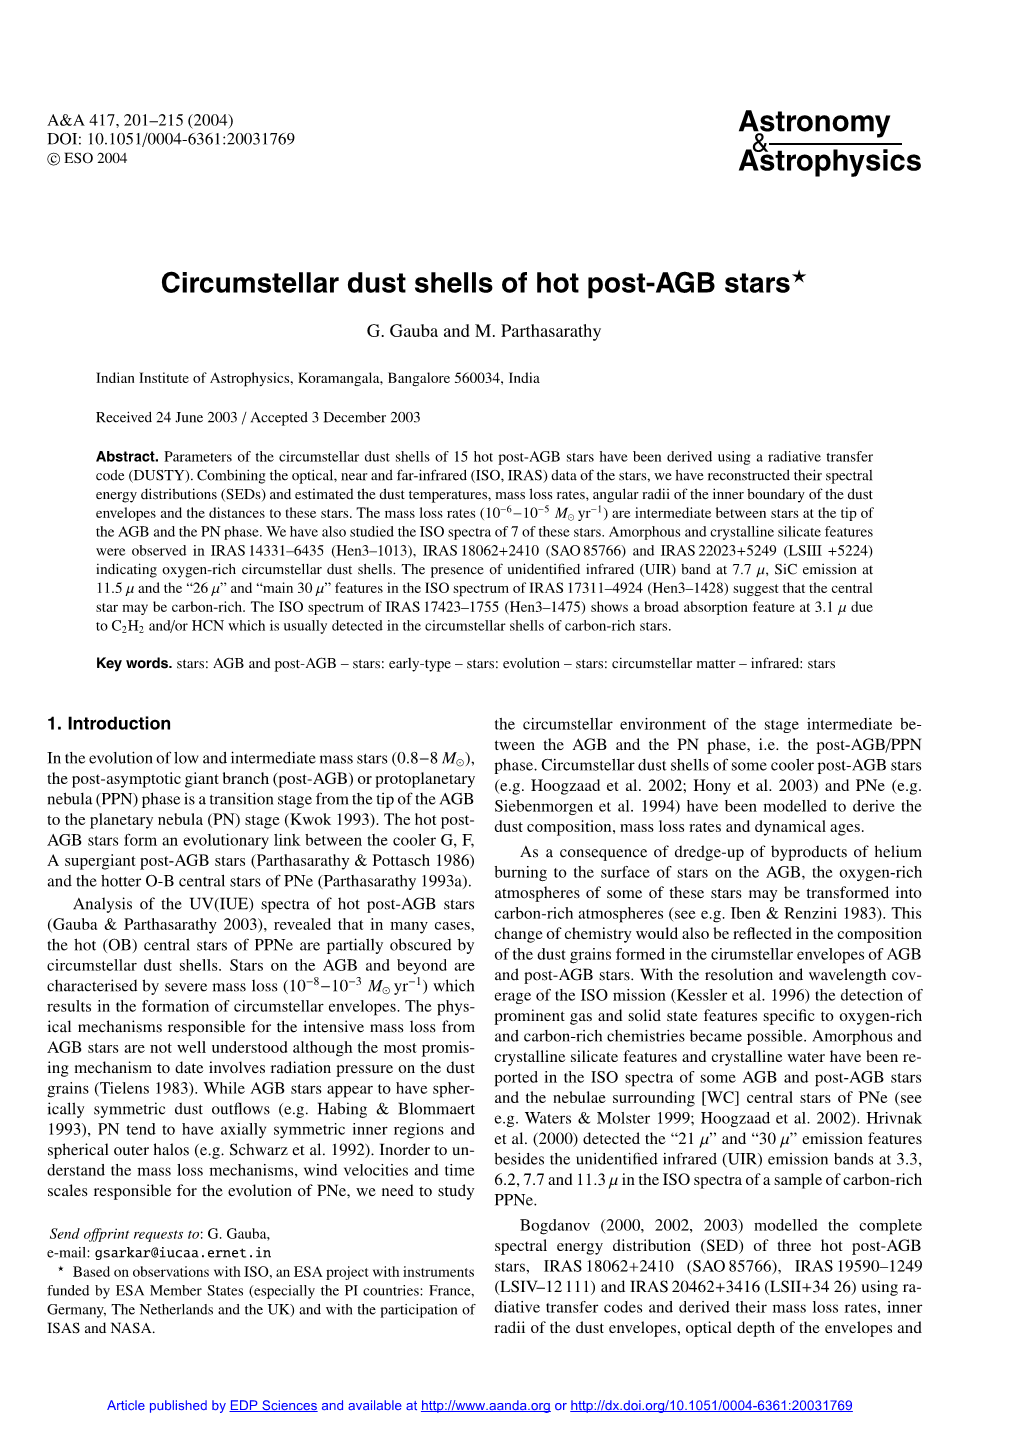 Circumstellar Dust Shells of Hot Post-AGB Stars